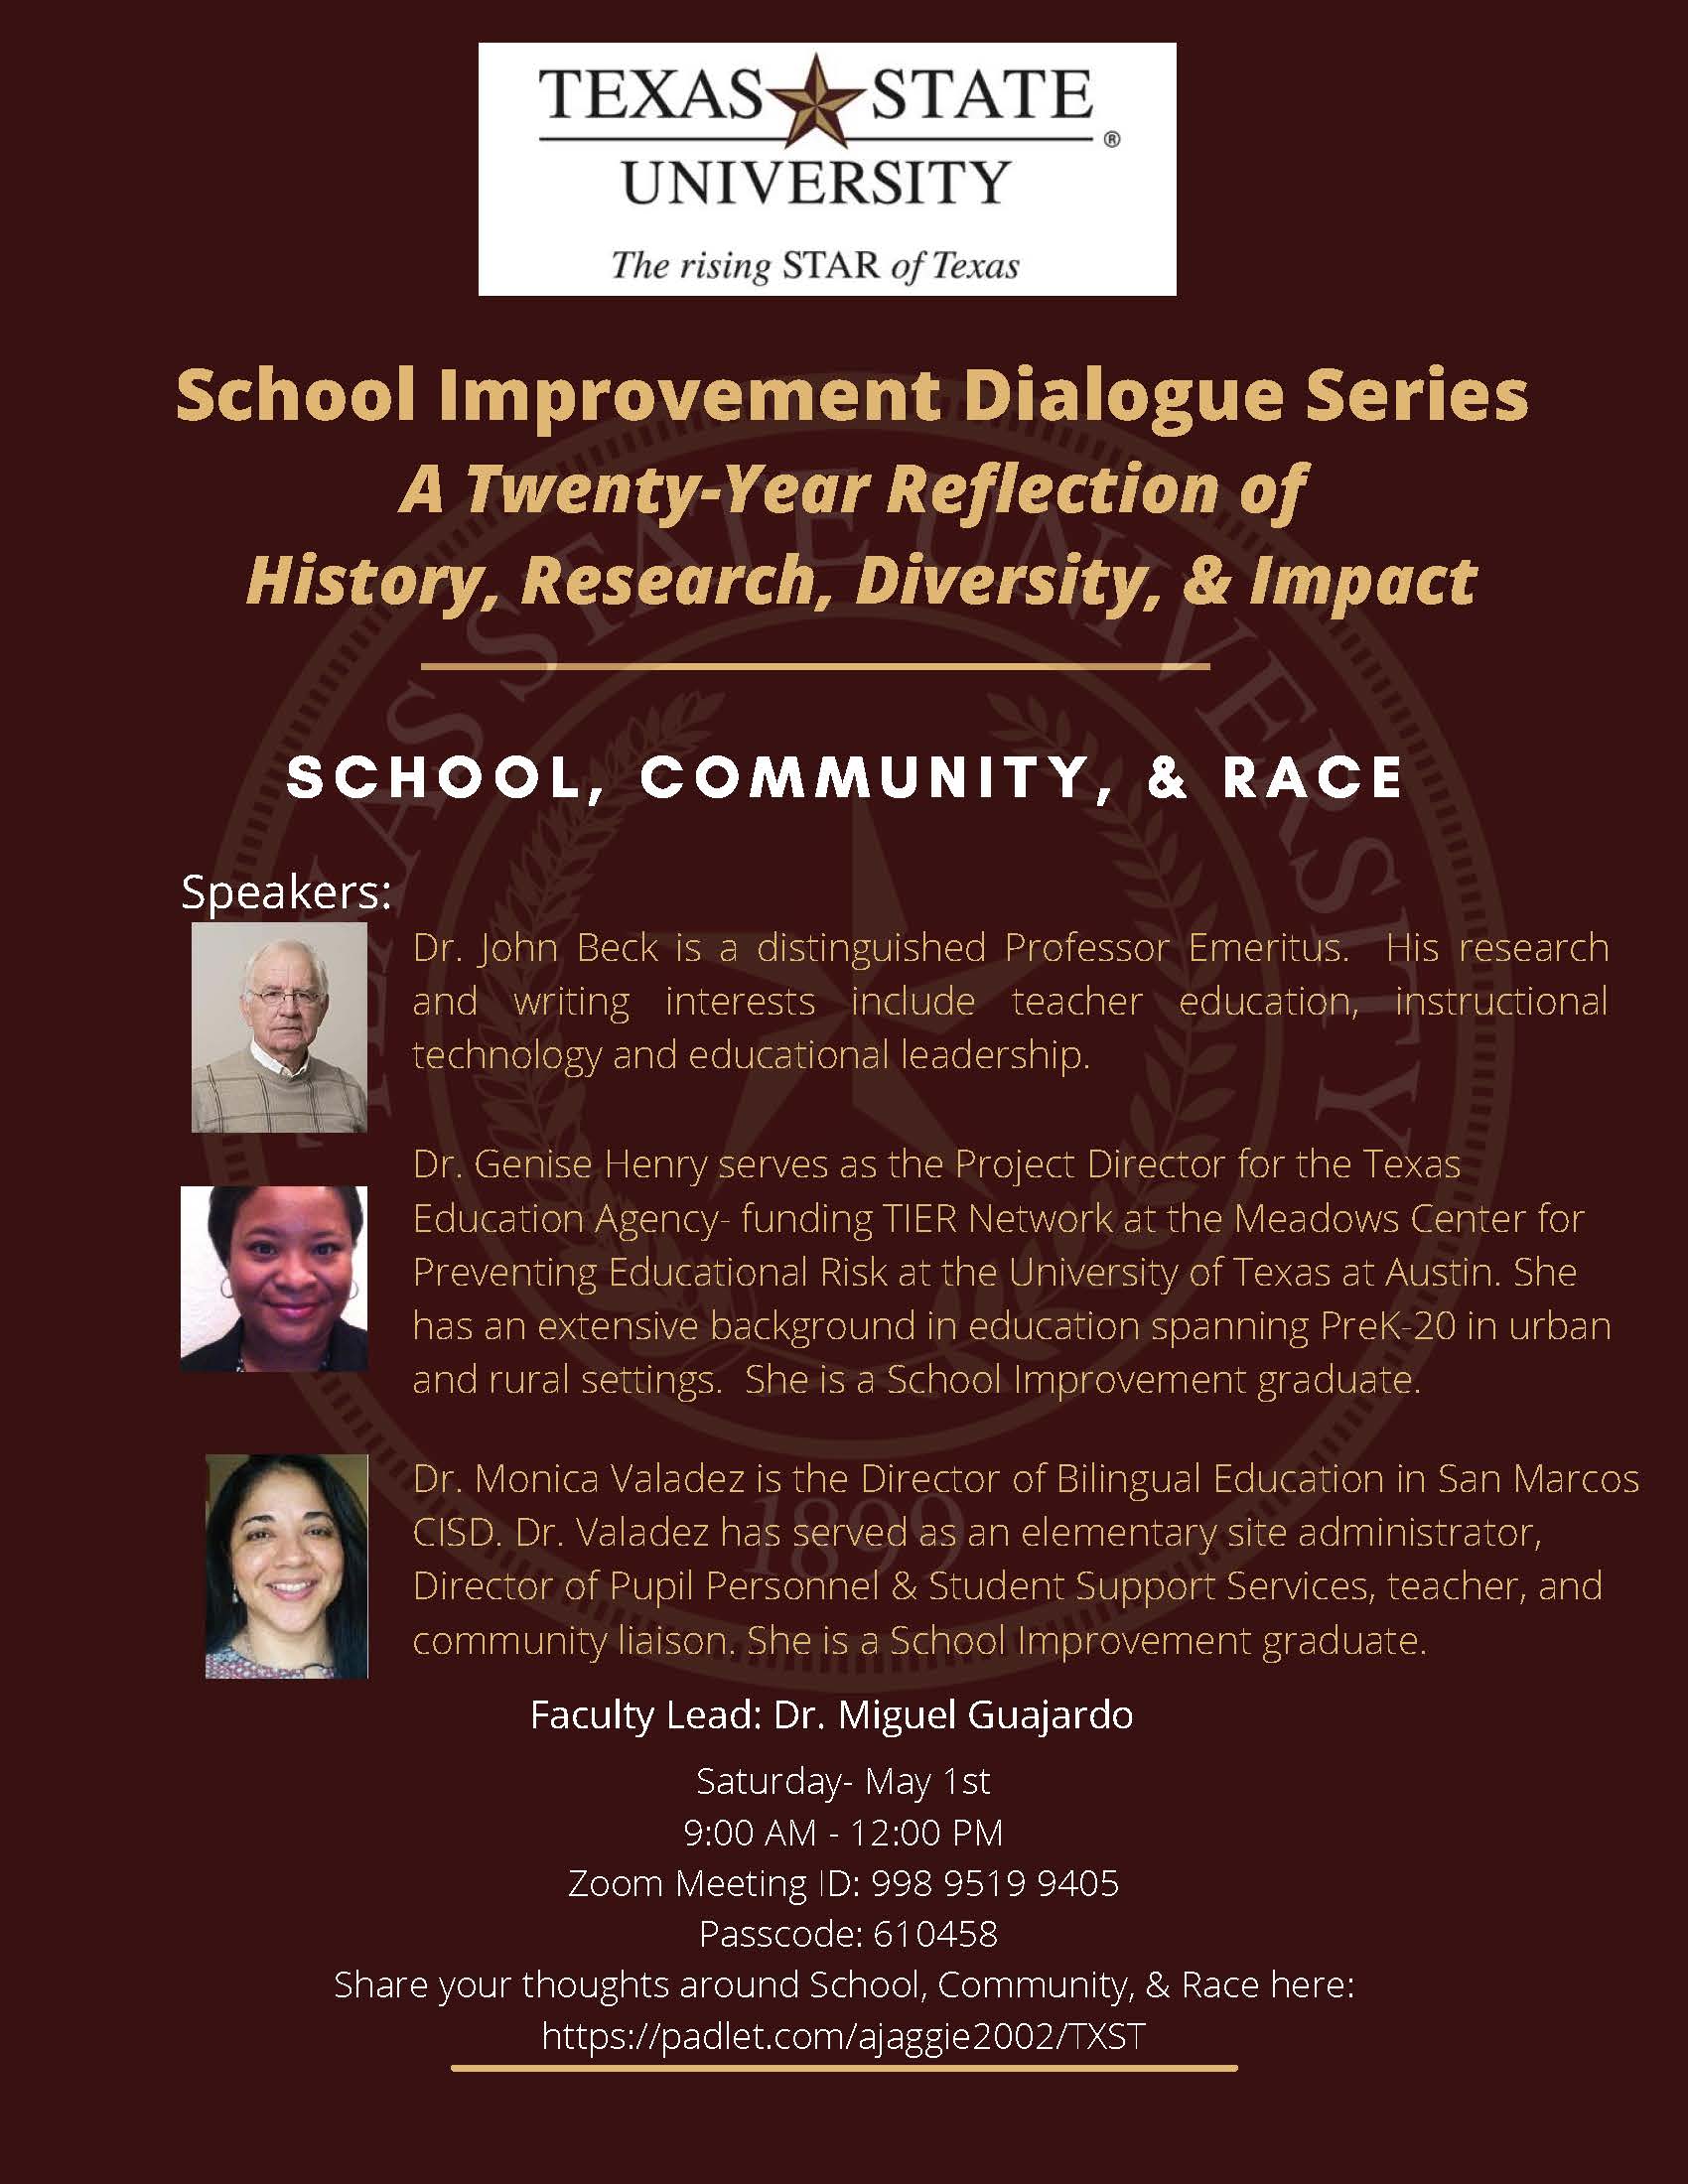 School, Community, and Race